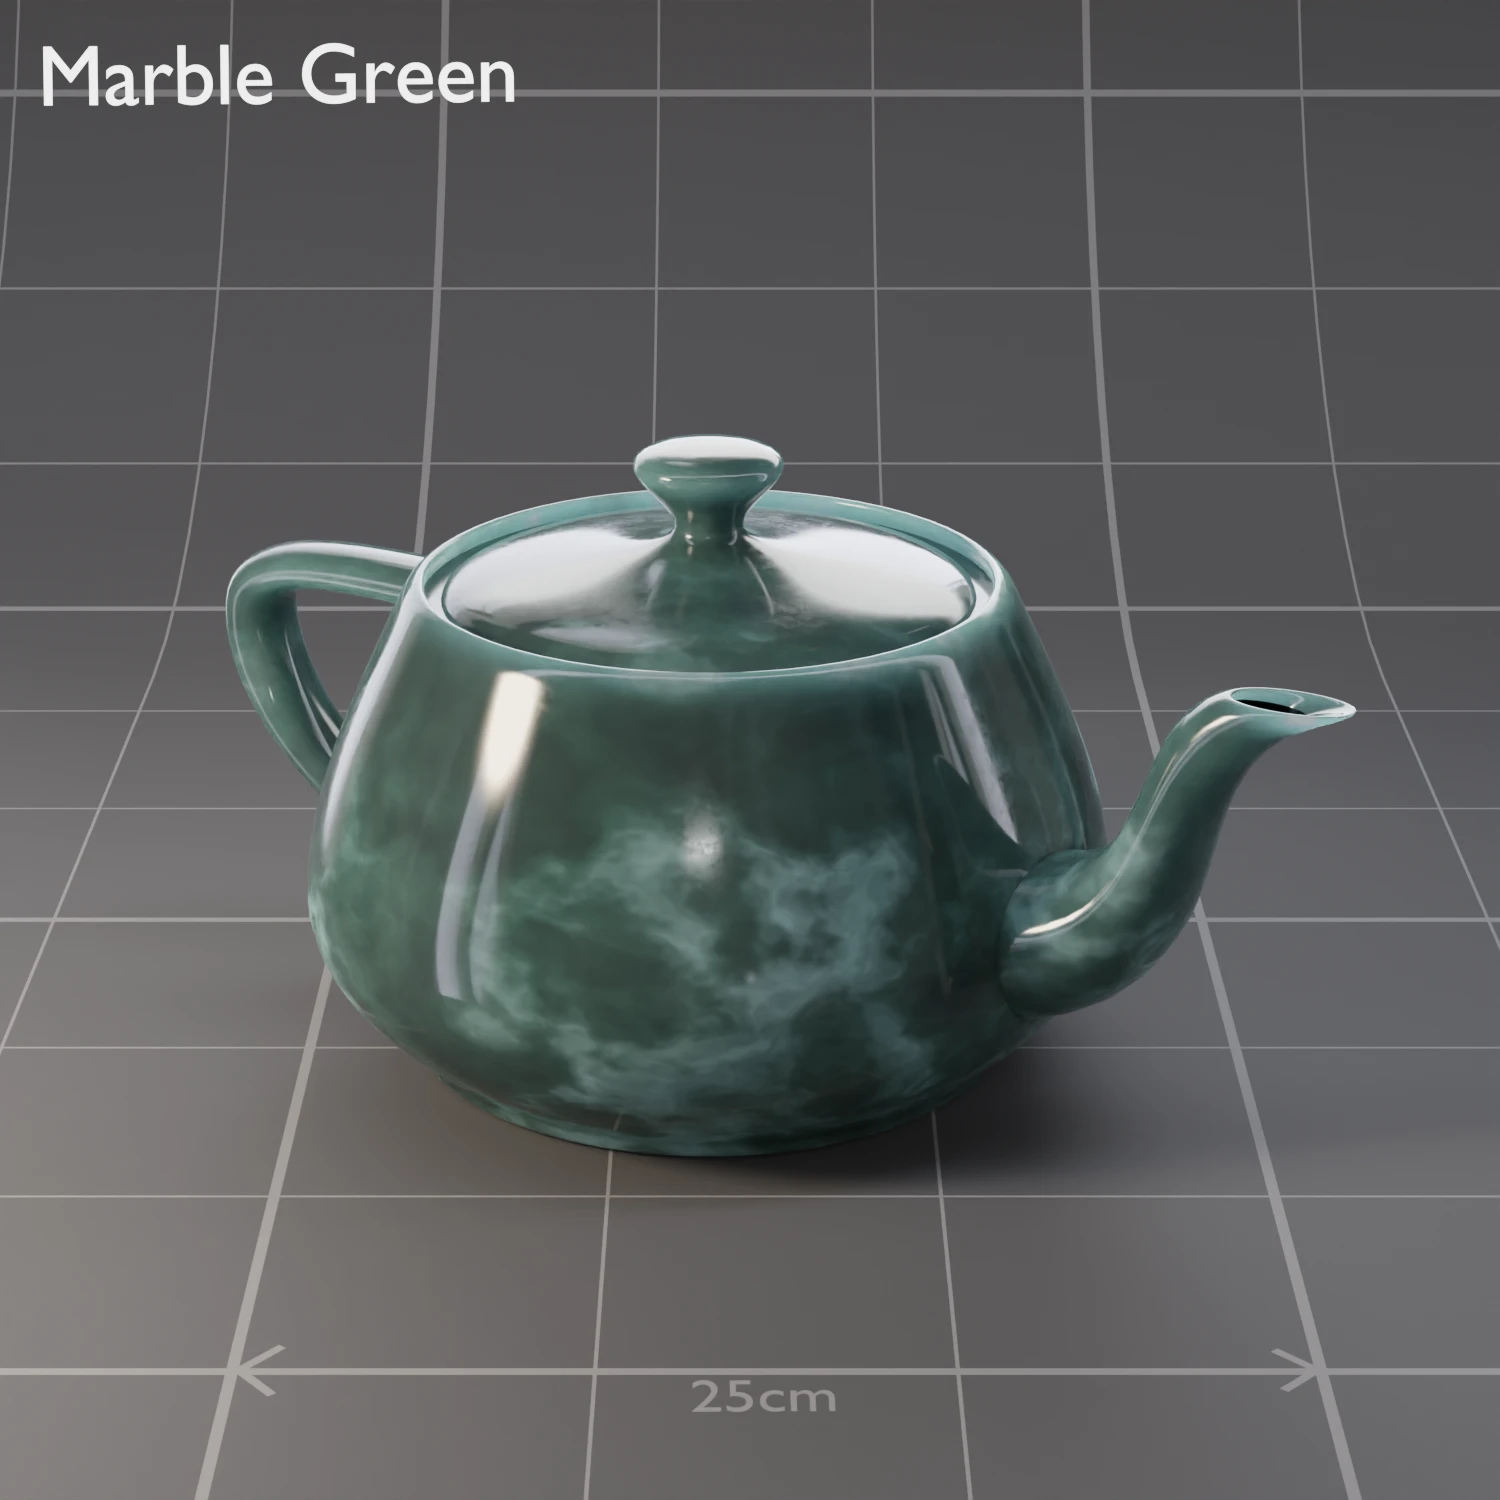 /pr/image/mats/Marble Green.WebP